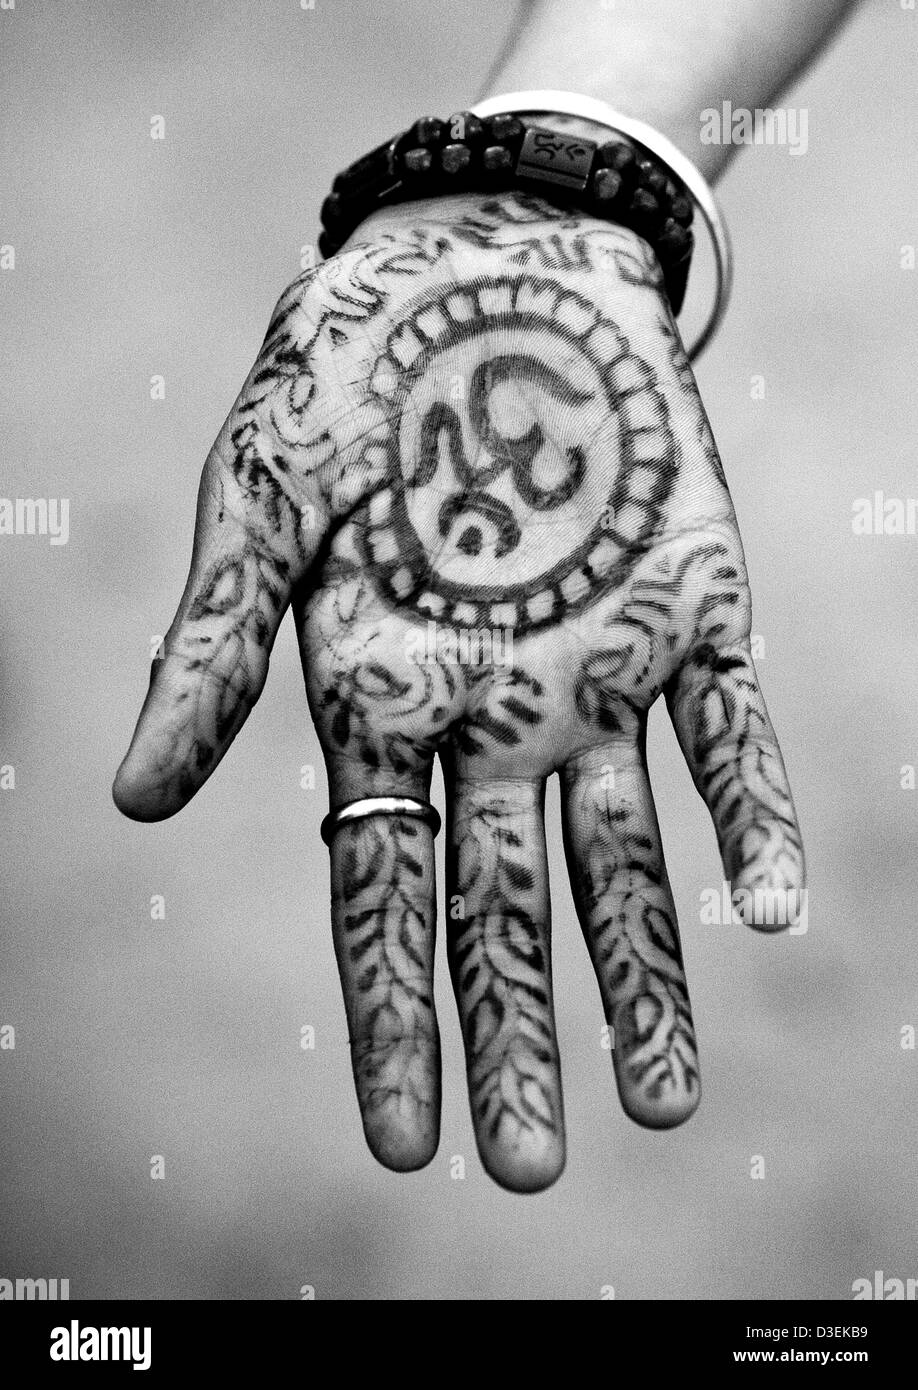 hinduism symbol on a hand maha kumbh mela allahabad india D3EKB9